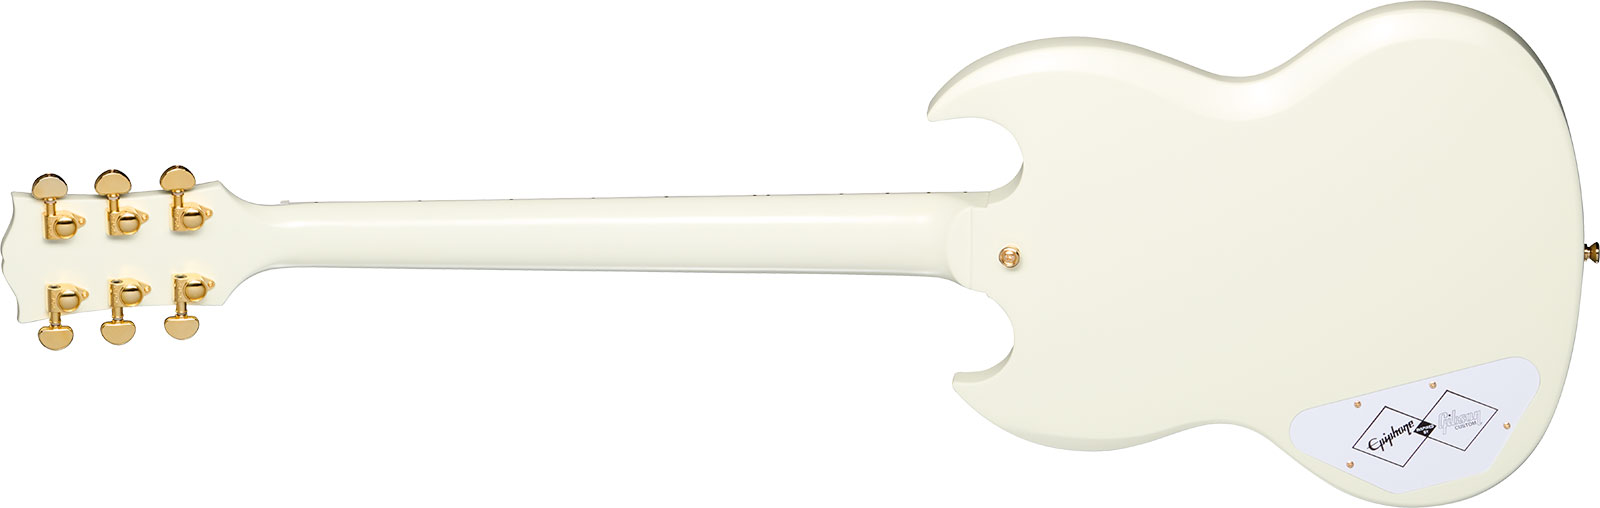 Epiphone Sg Les Paul Custom 1963 Maestro Vibrola Inspired By 2h Trem Eb - Vos Classic White - Guitarra eléctrica de doble corte. - Variation 1